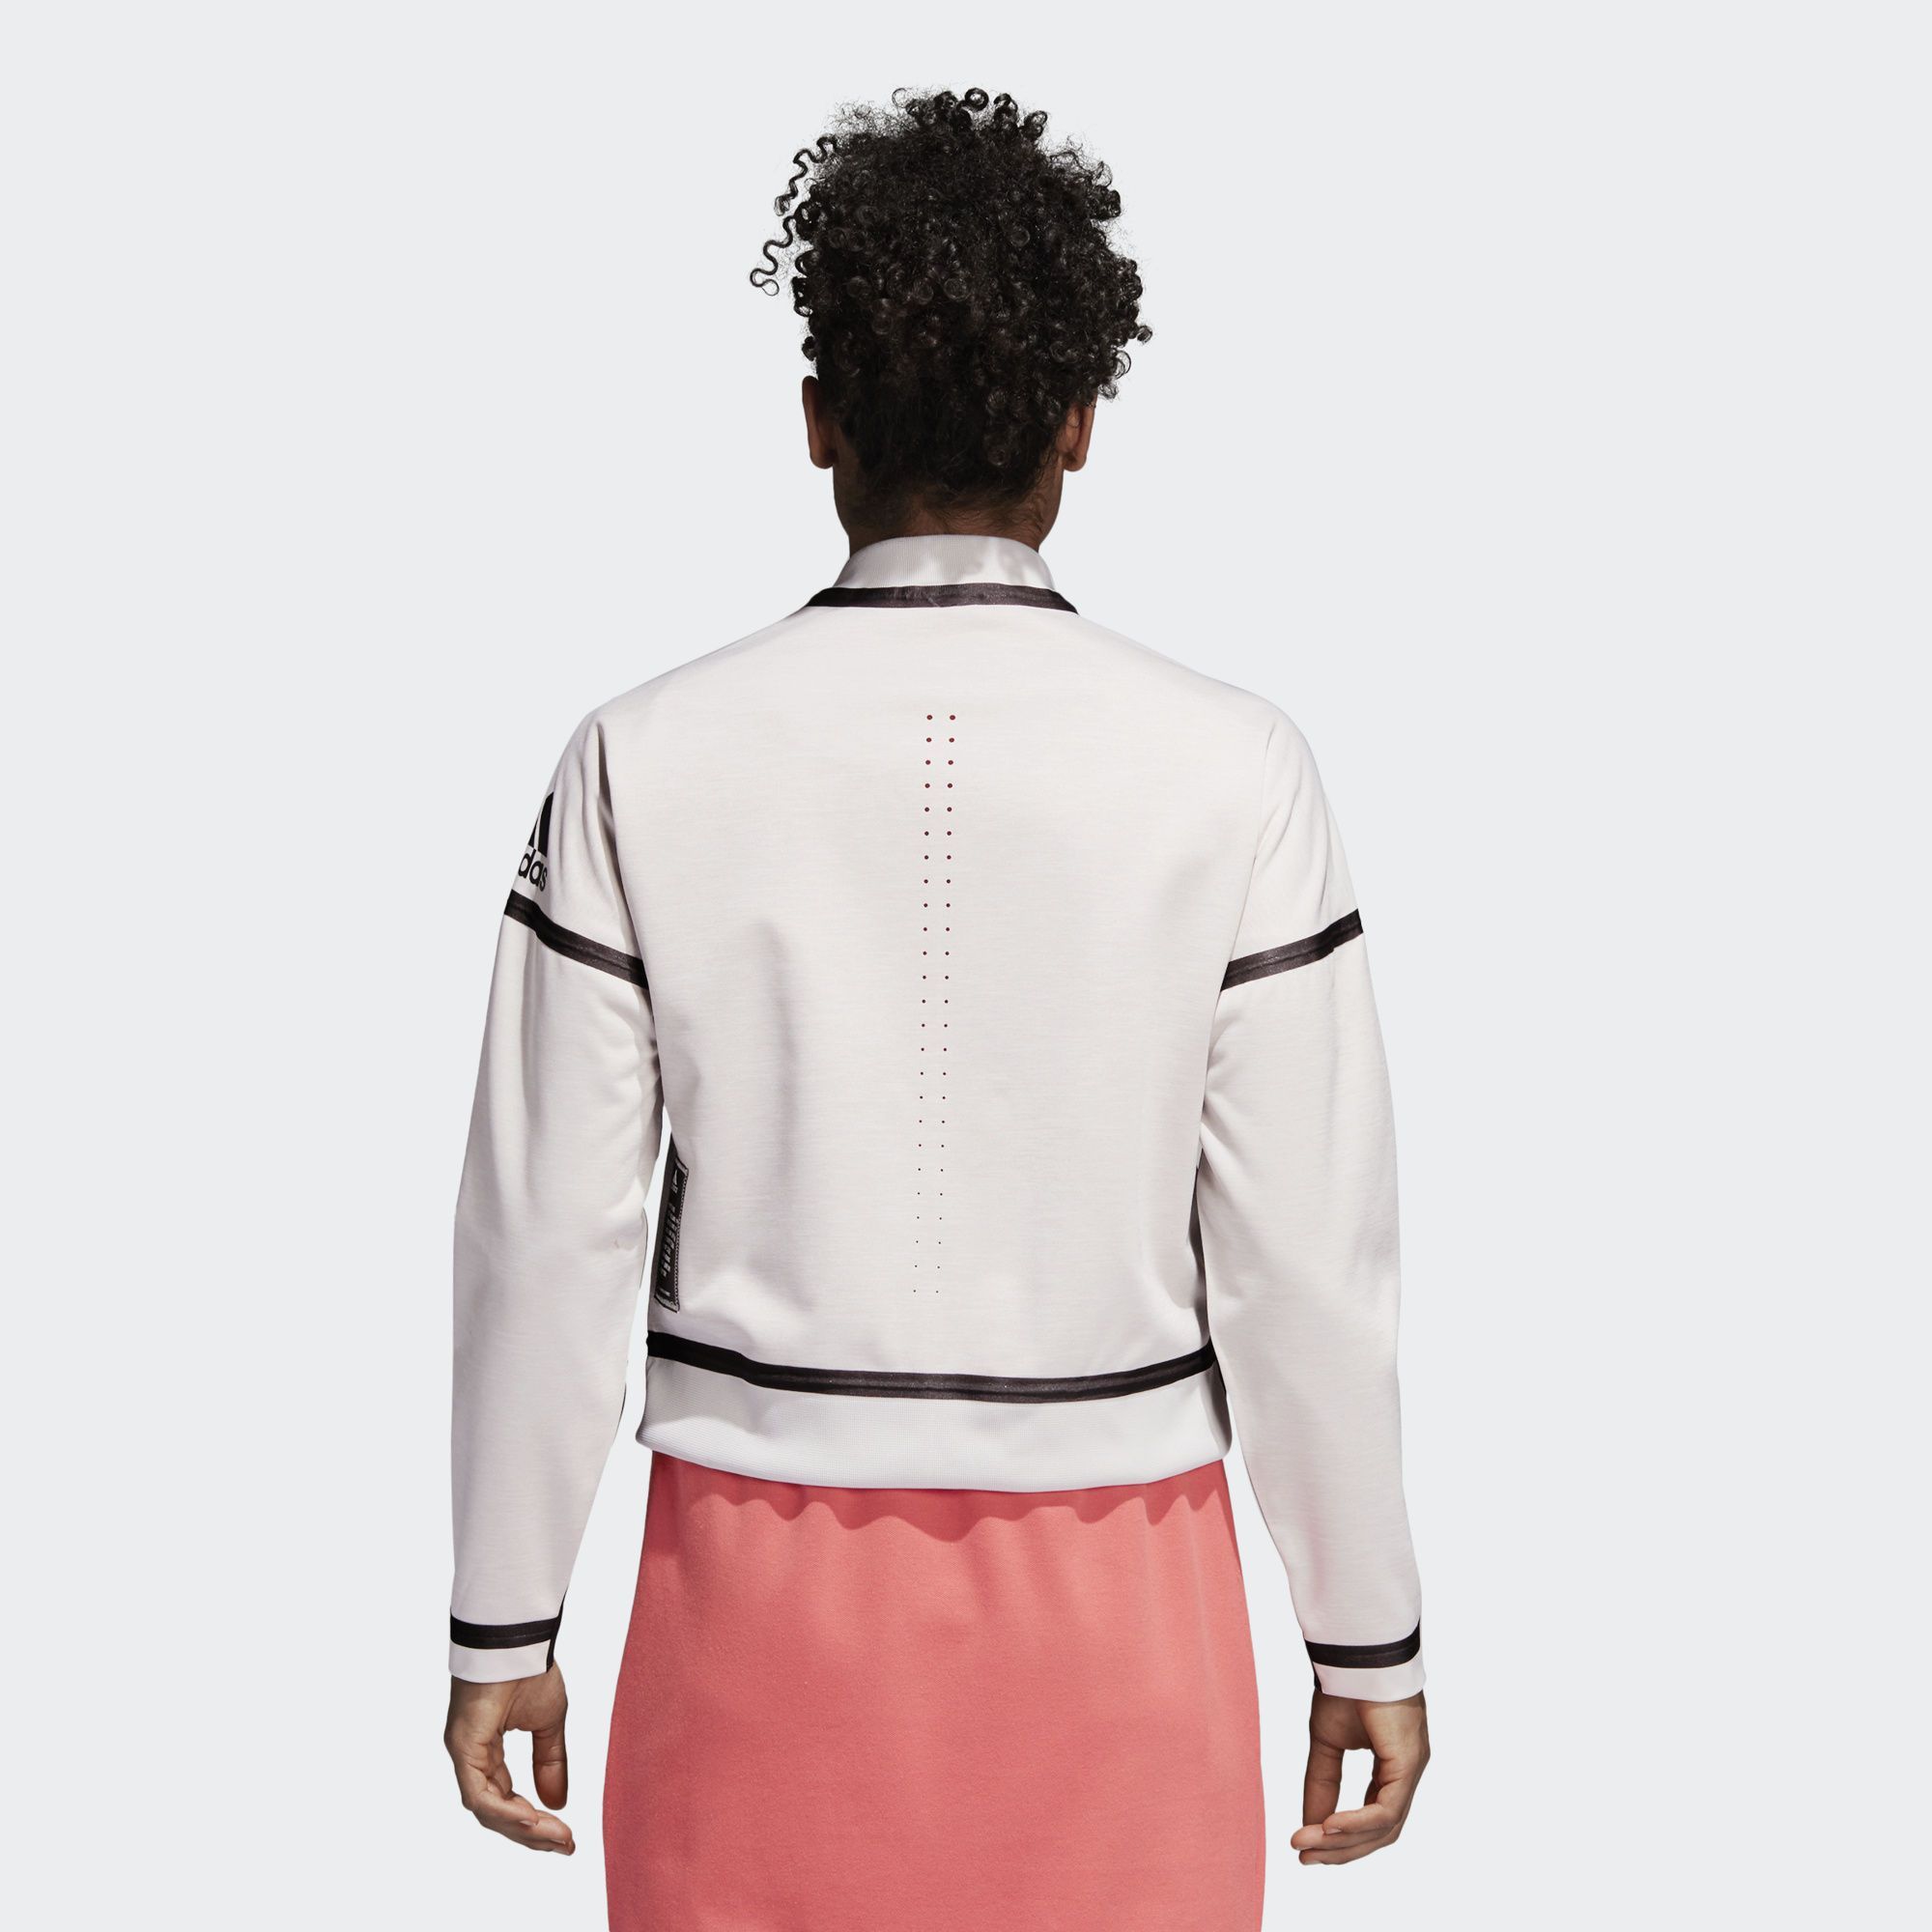 CLOTHING - Adidas Originals Women Reversible Zne Jacket Rev White CF1465